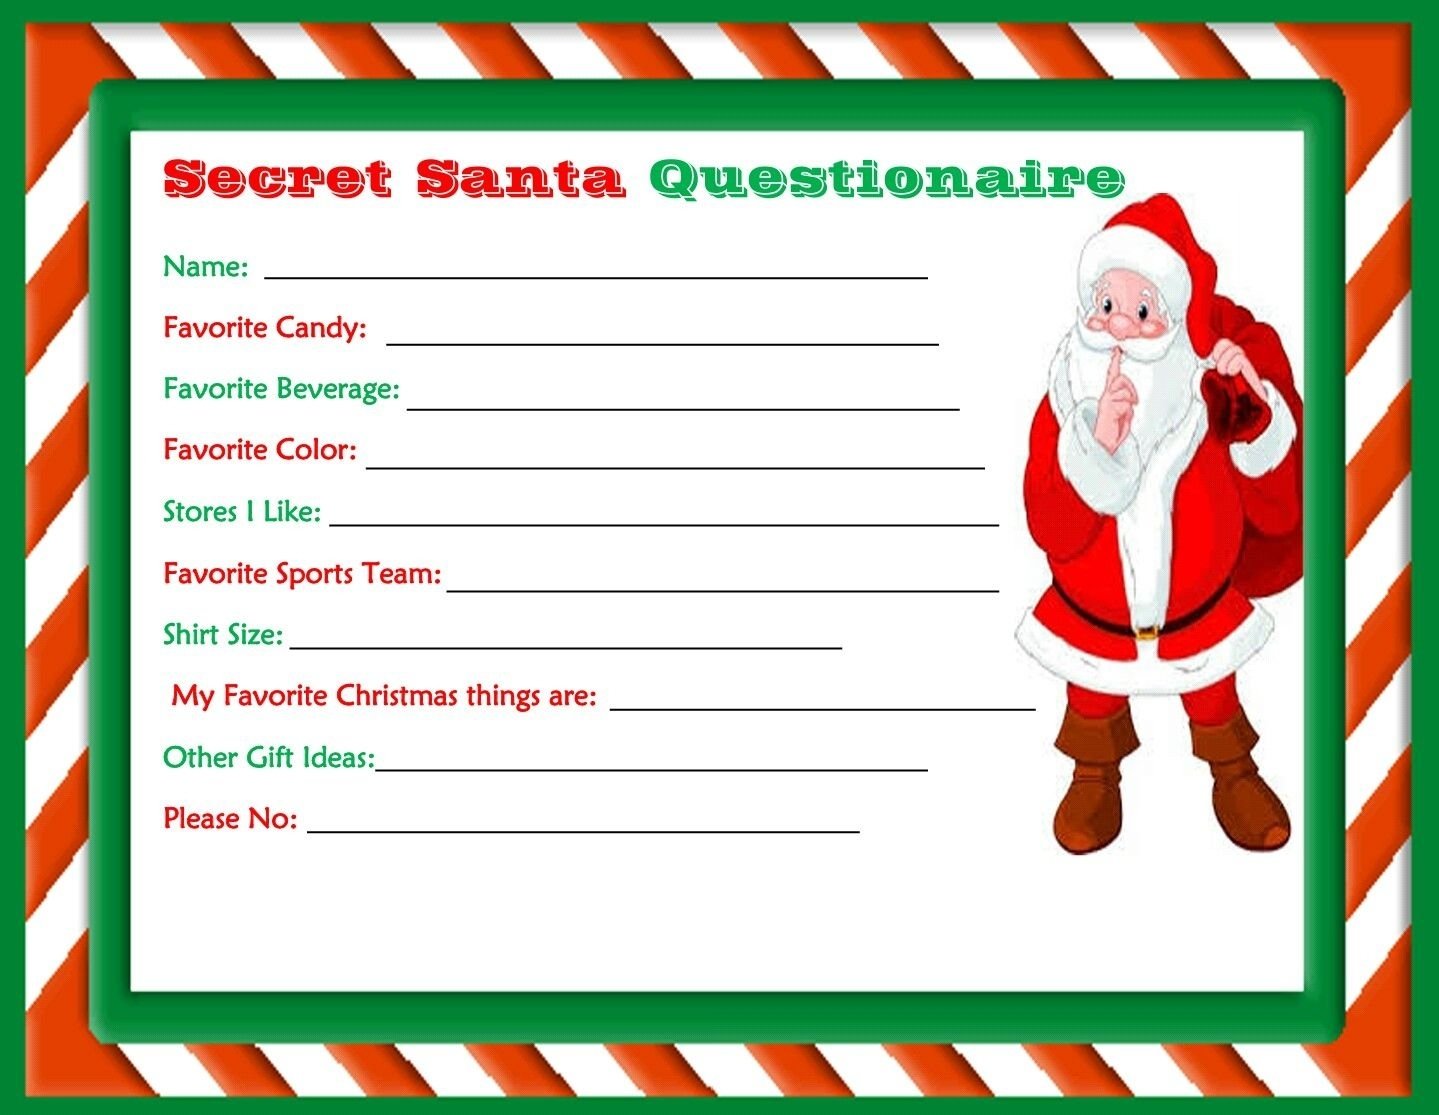 Secret Santa List Printable